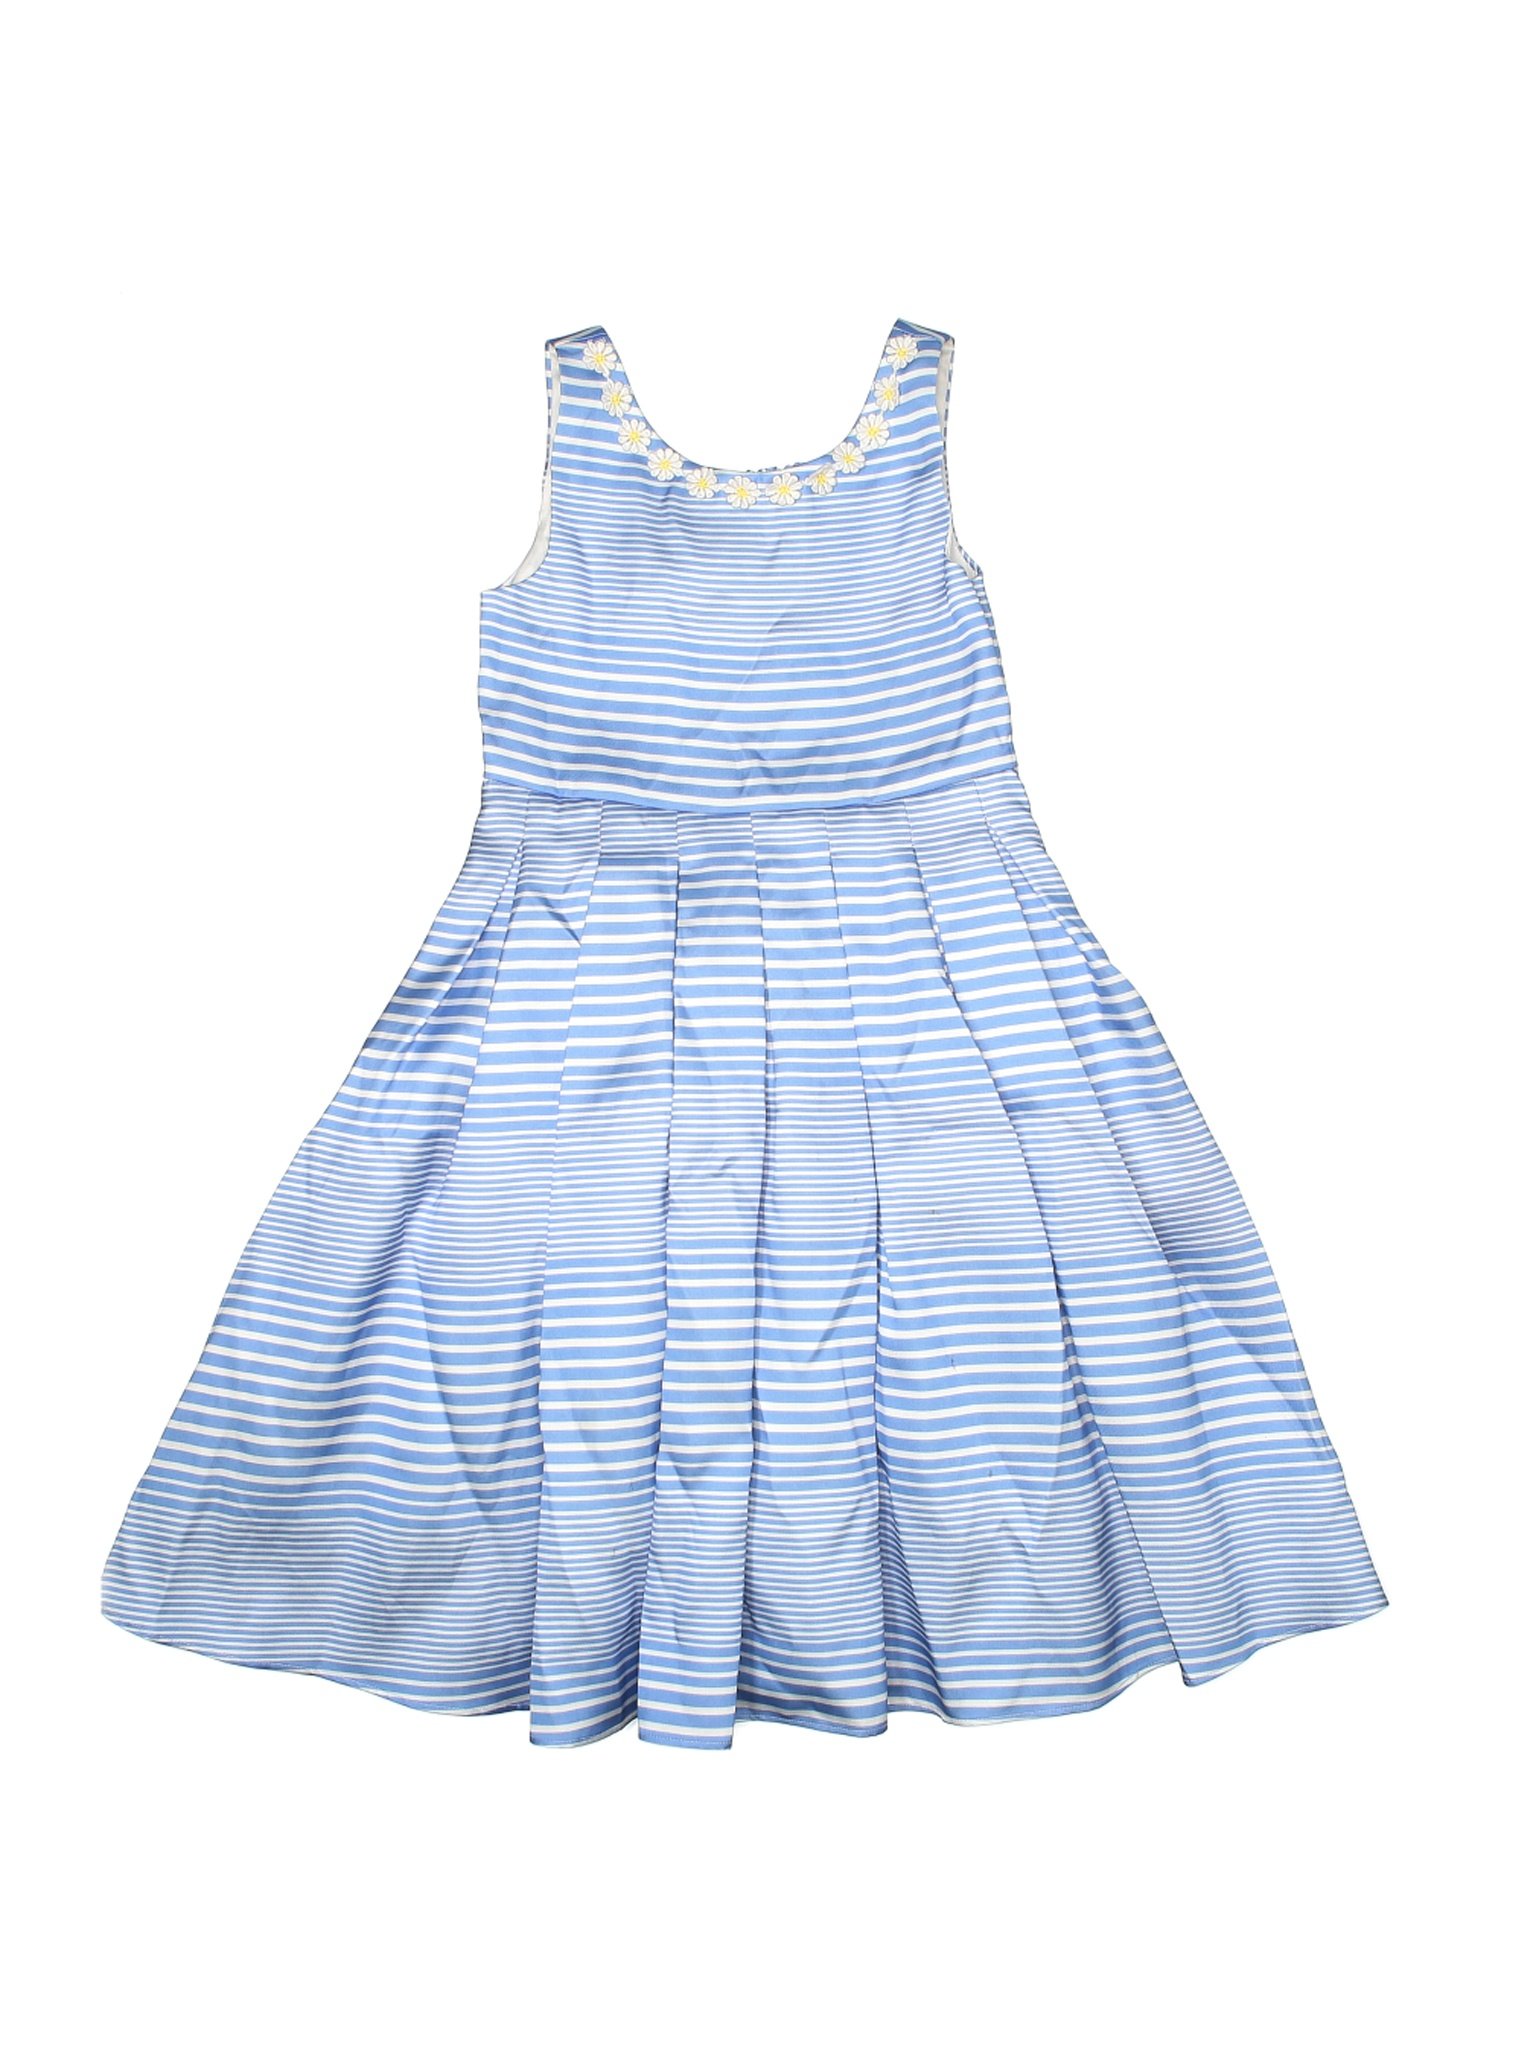 Monsoon Girls Blue Special Occasion Dress 9 | eBay